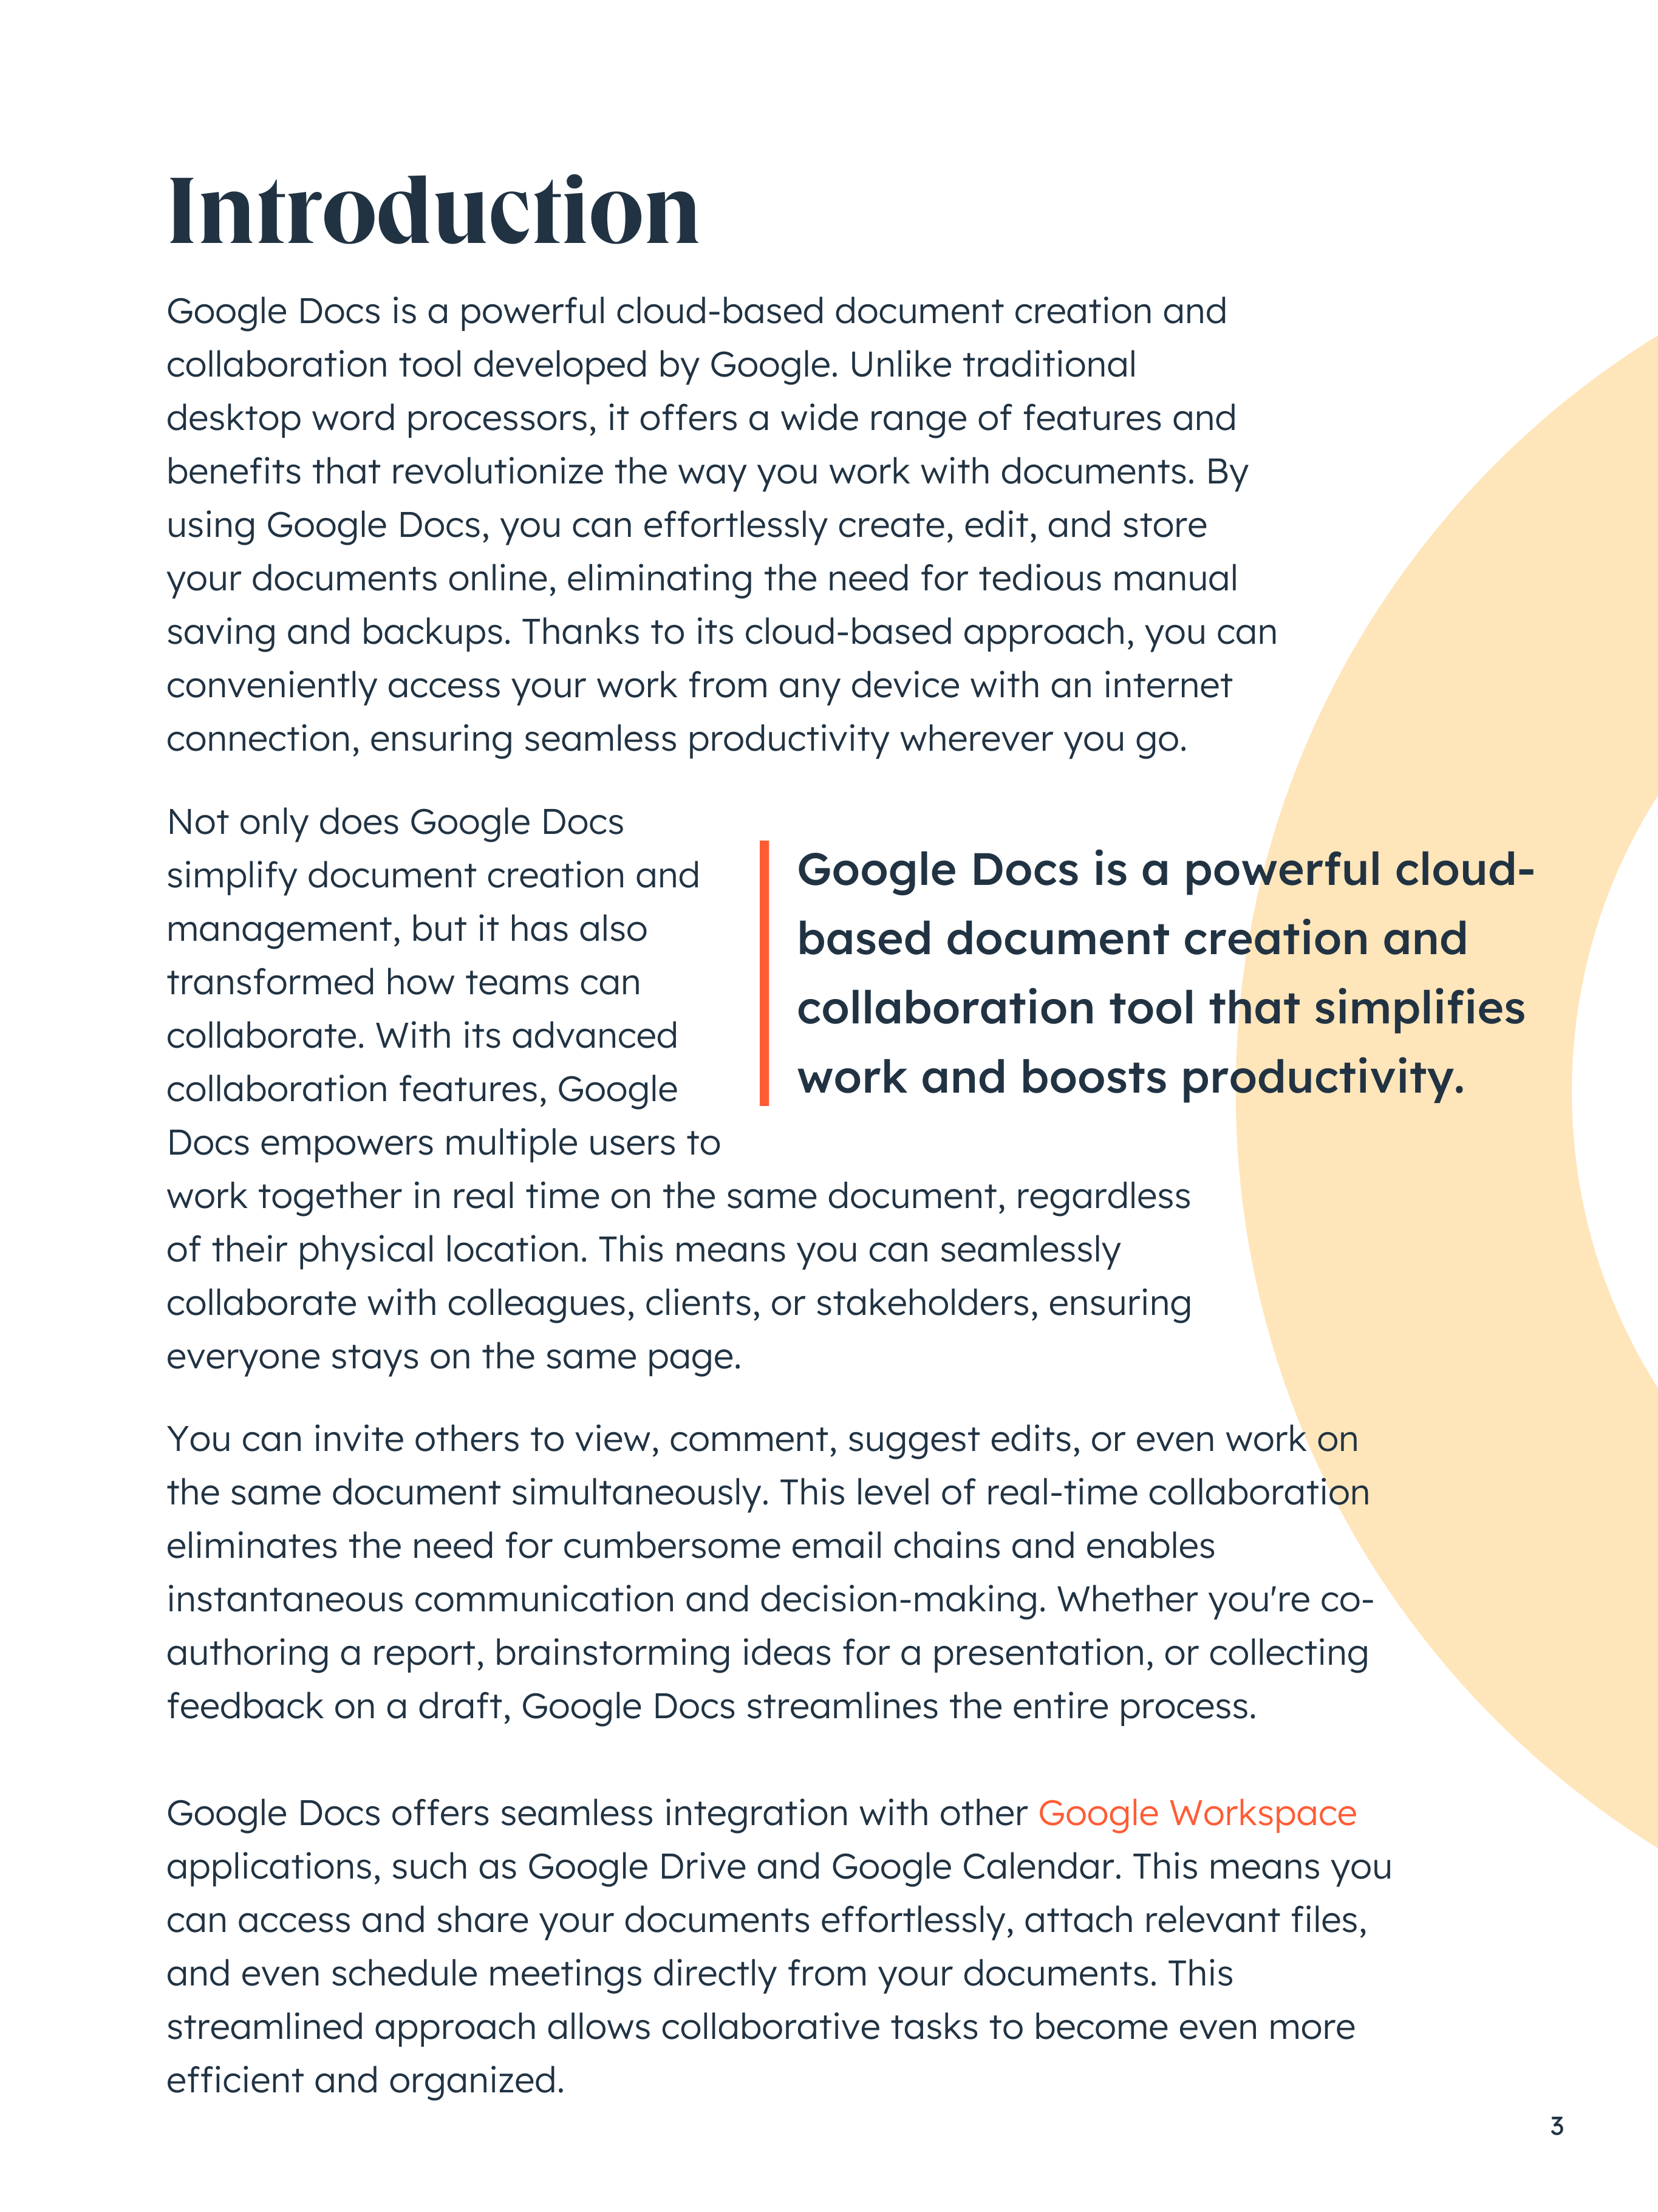 HubSpot Google Docs Guide - 8